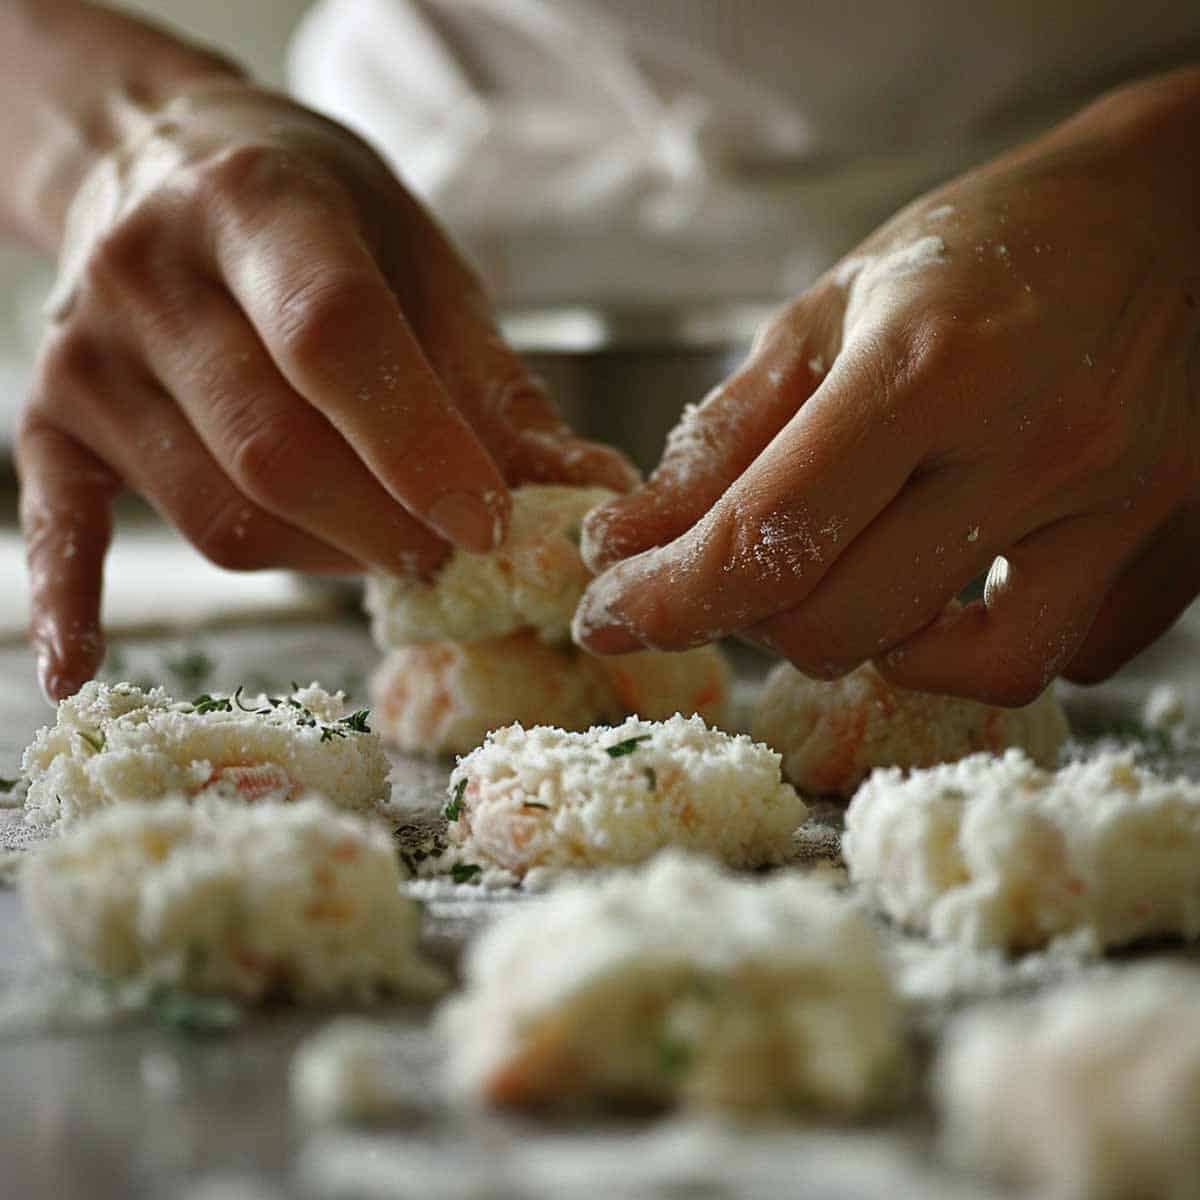 Shaping shrimp mixture into patties, coating evenly in breadcrumbs